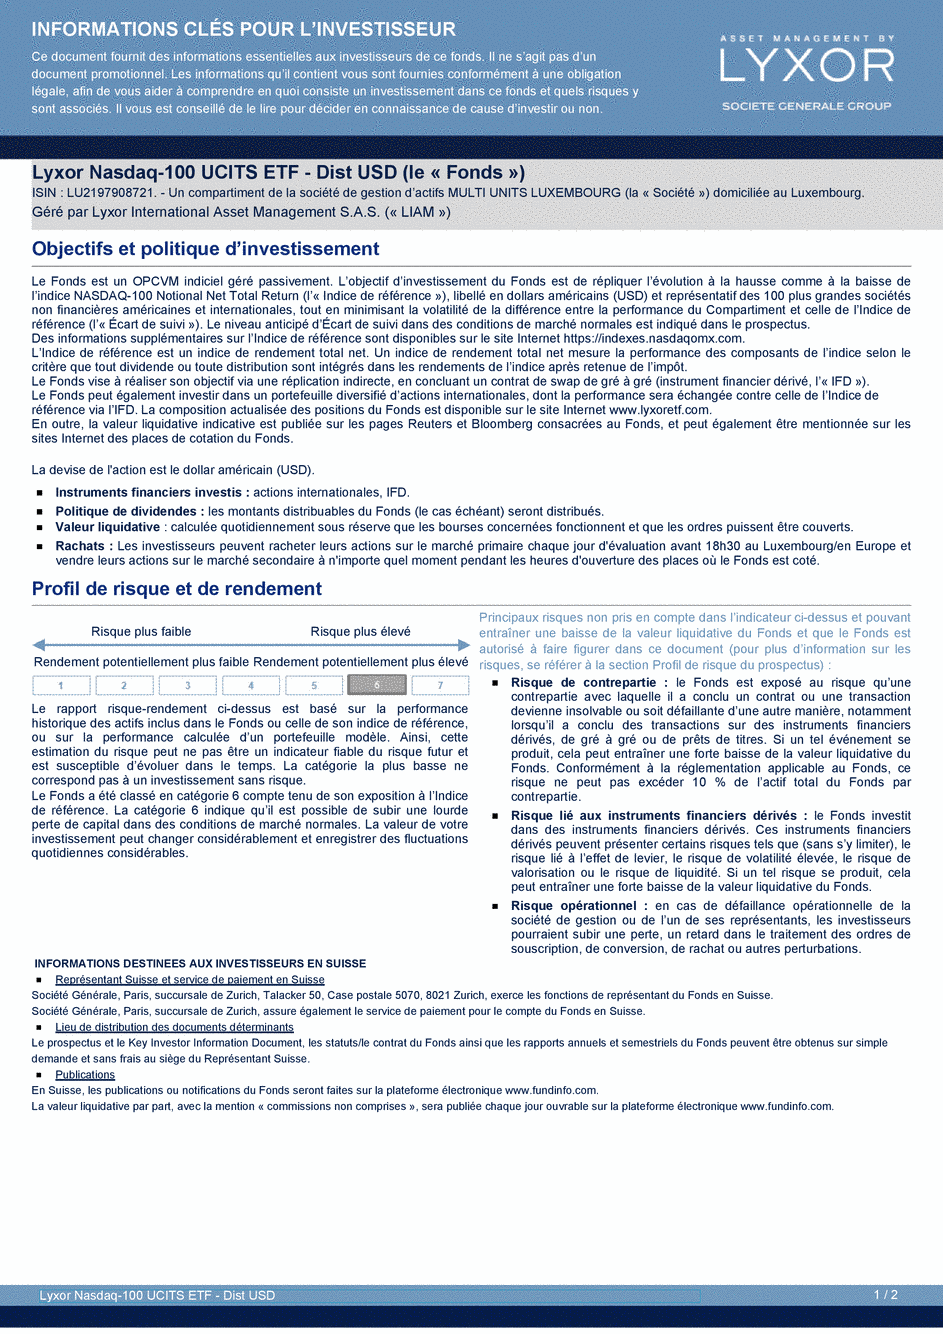 DICI Lyxor Nasdaq-100 UCITS ETF - Dist USD - 18/06/2020 - Français